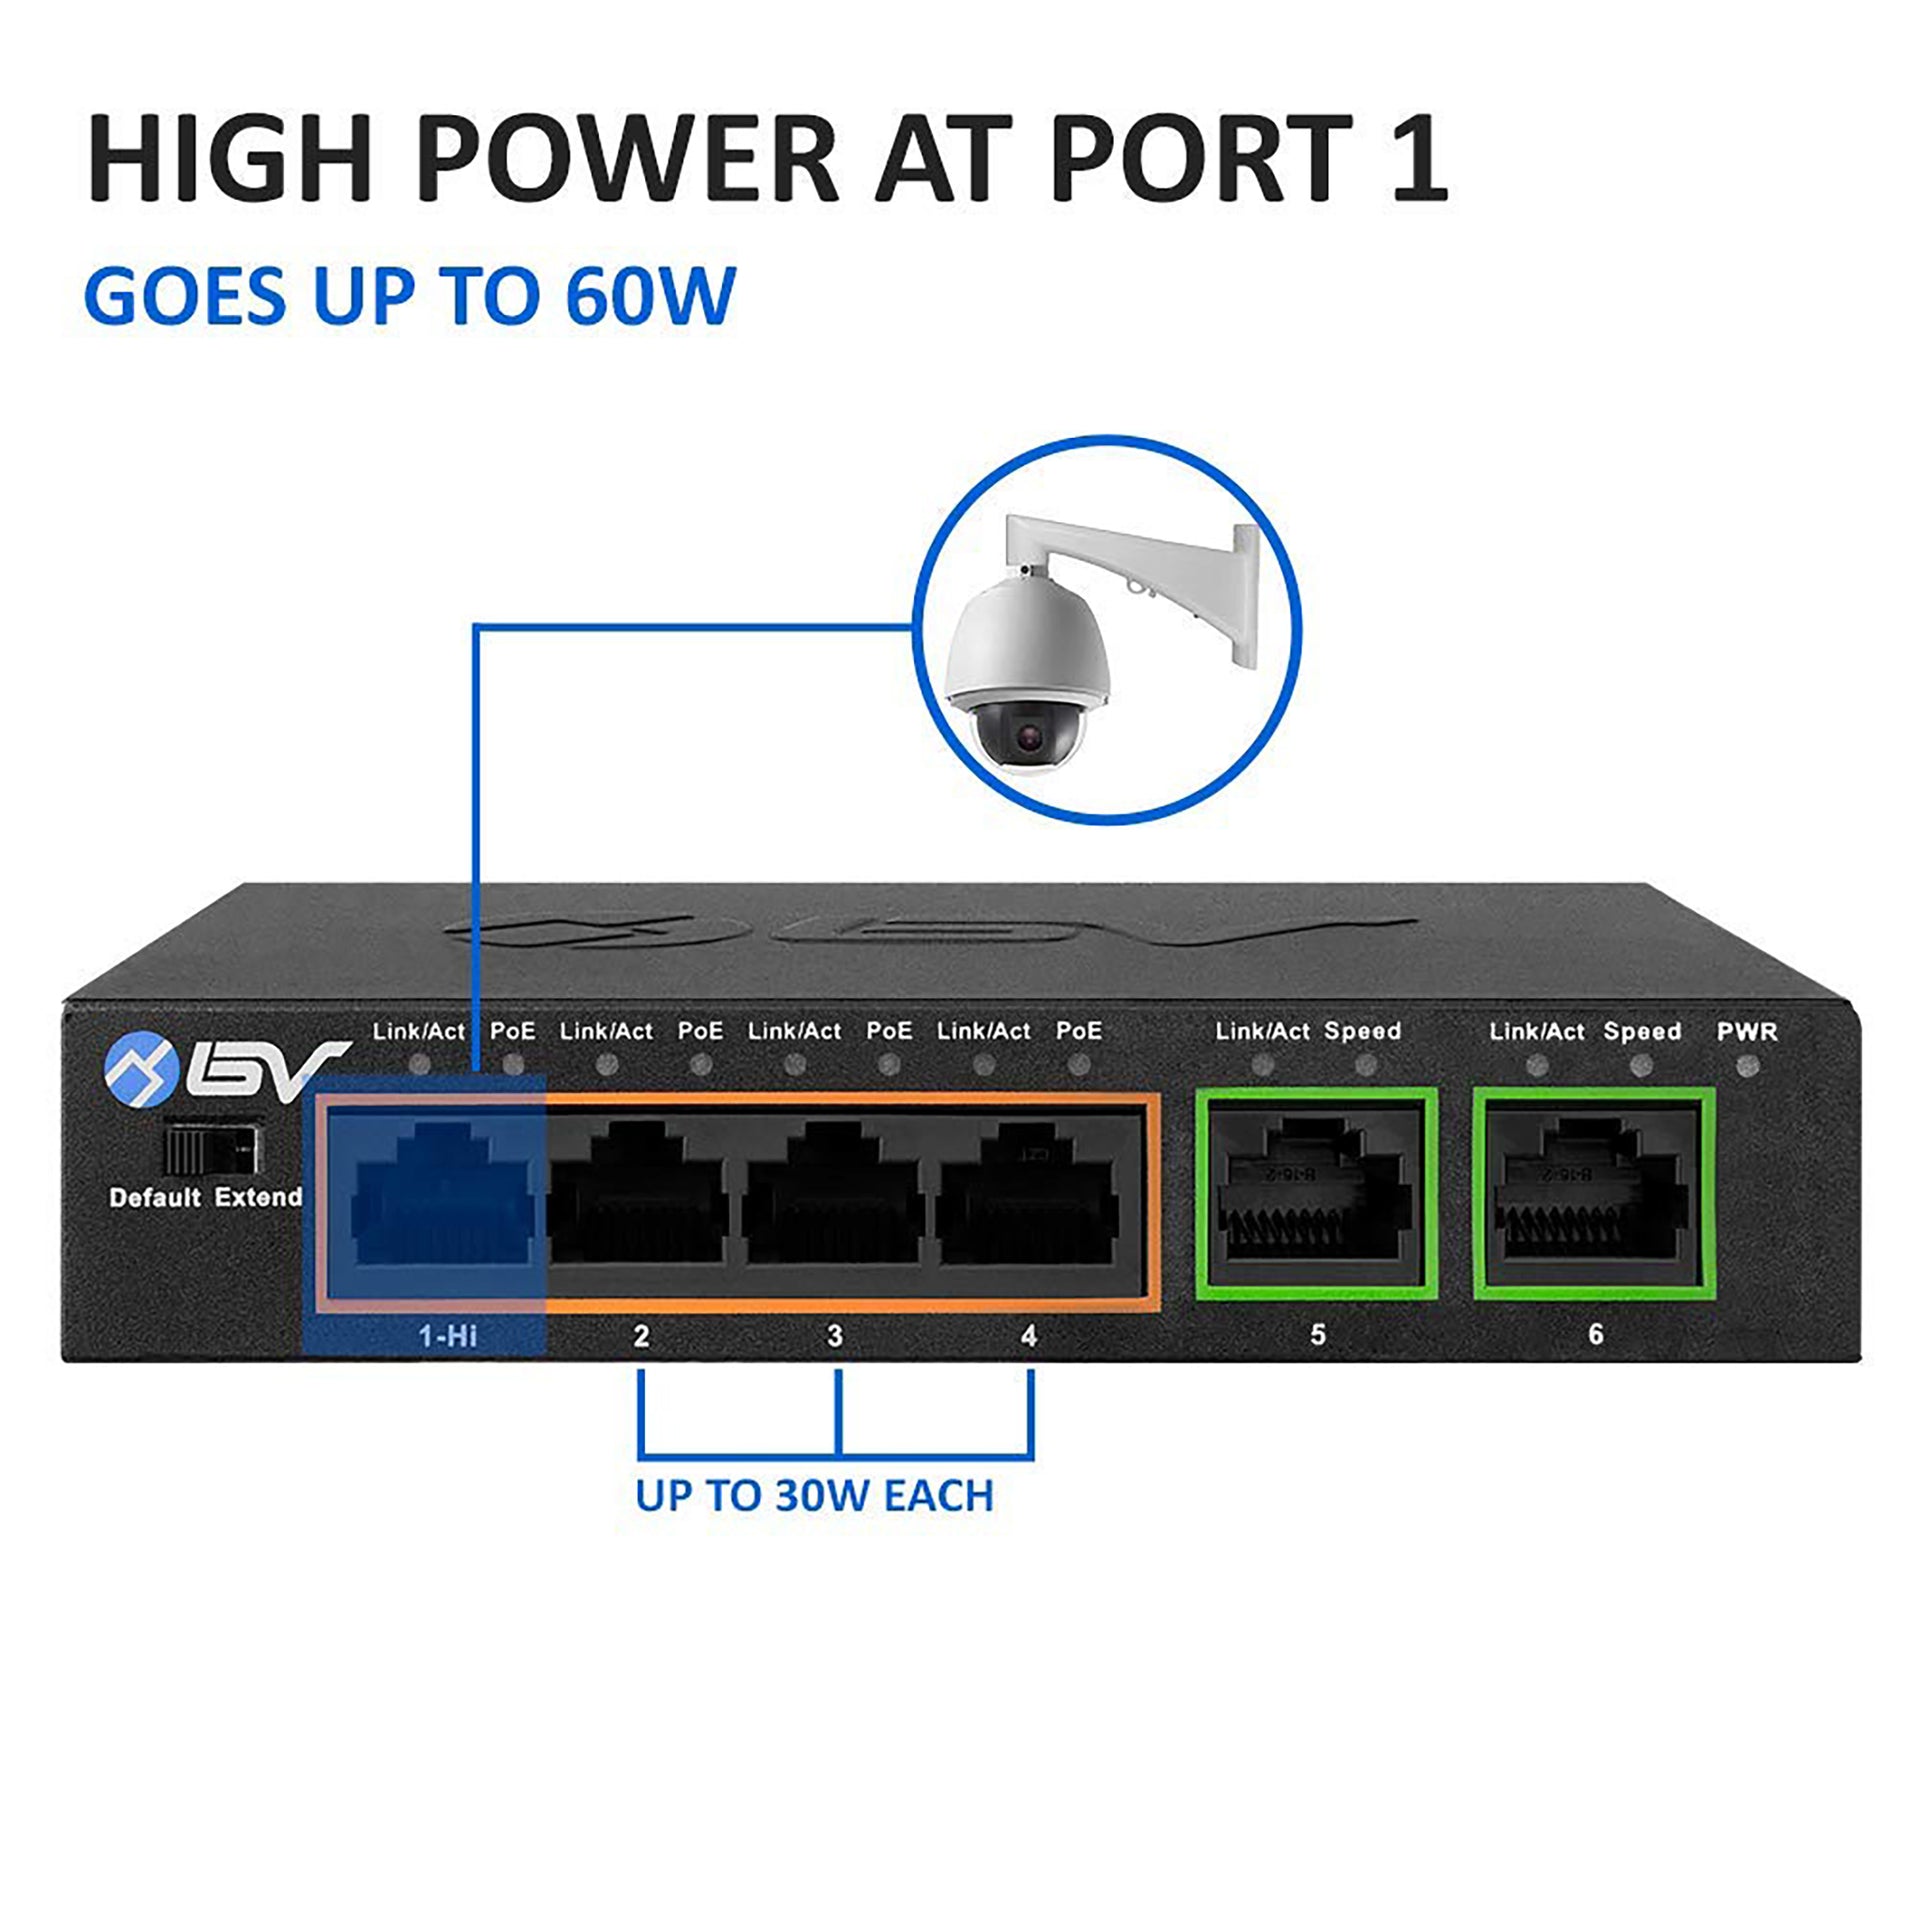 POE Switch 4 Port - Option 2 - MRE MR Powertech